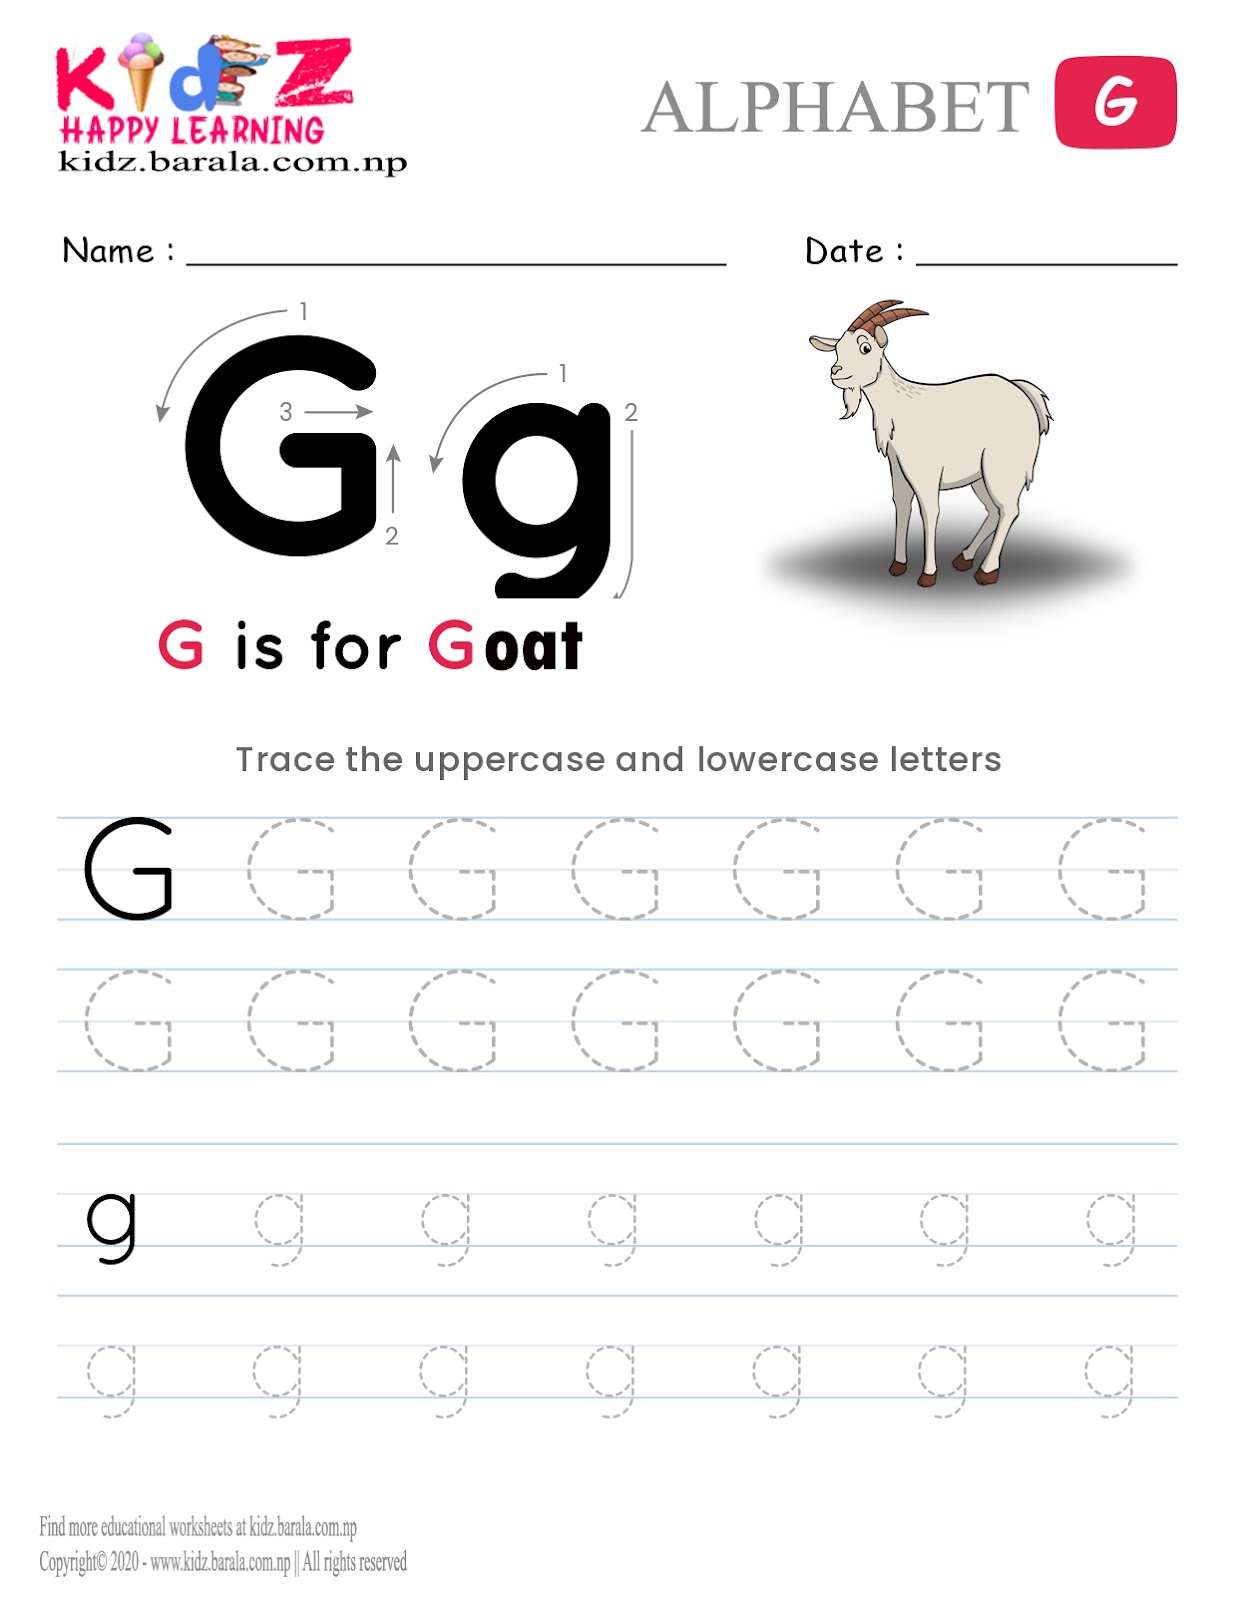 Alphabet G tracing worksheet free download .pdf